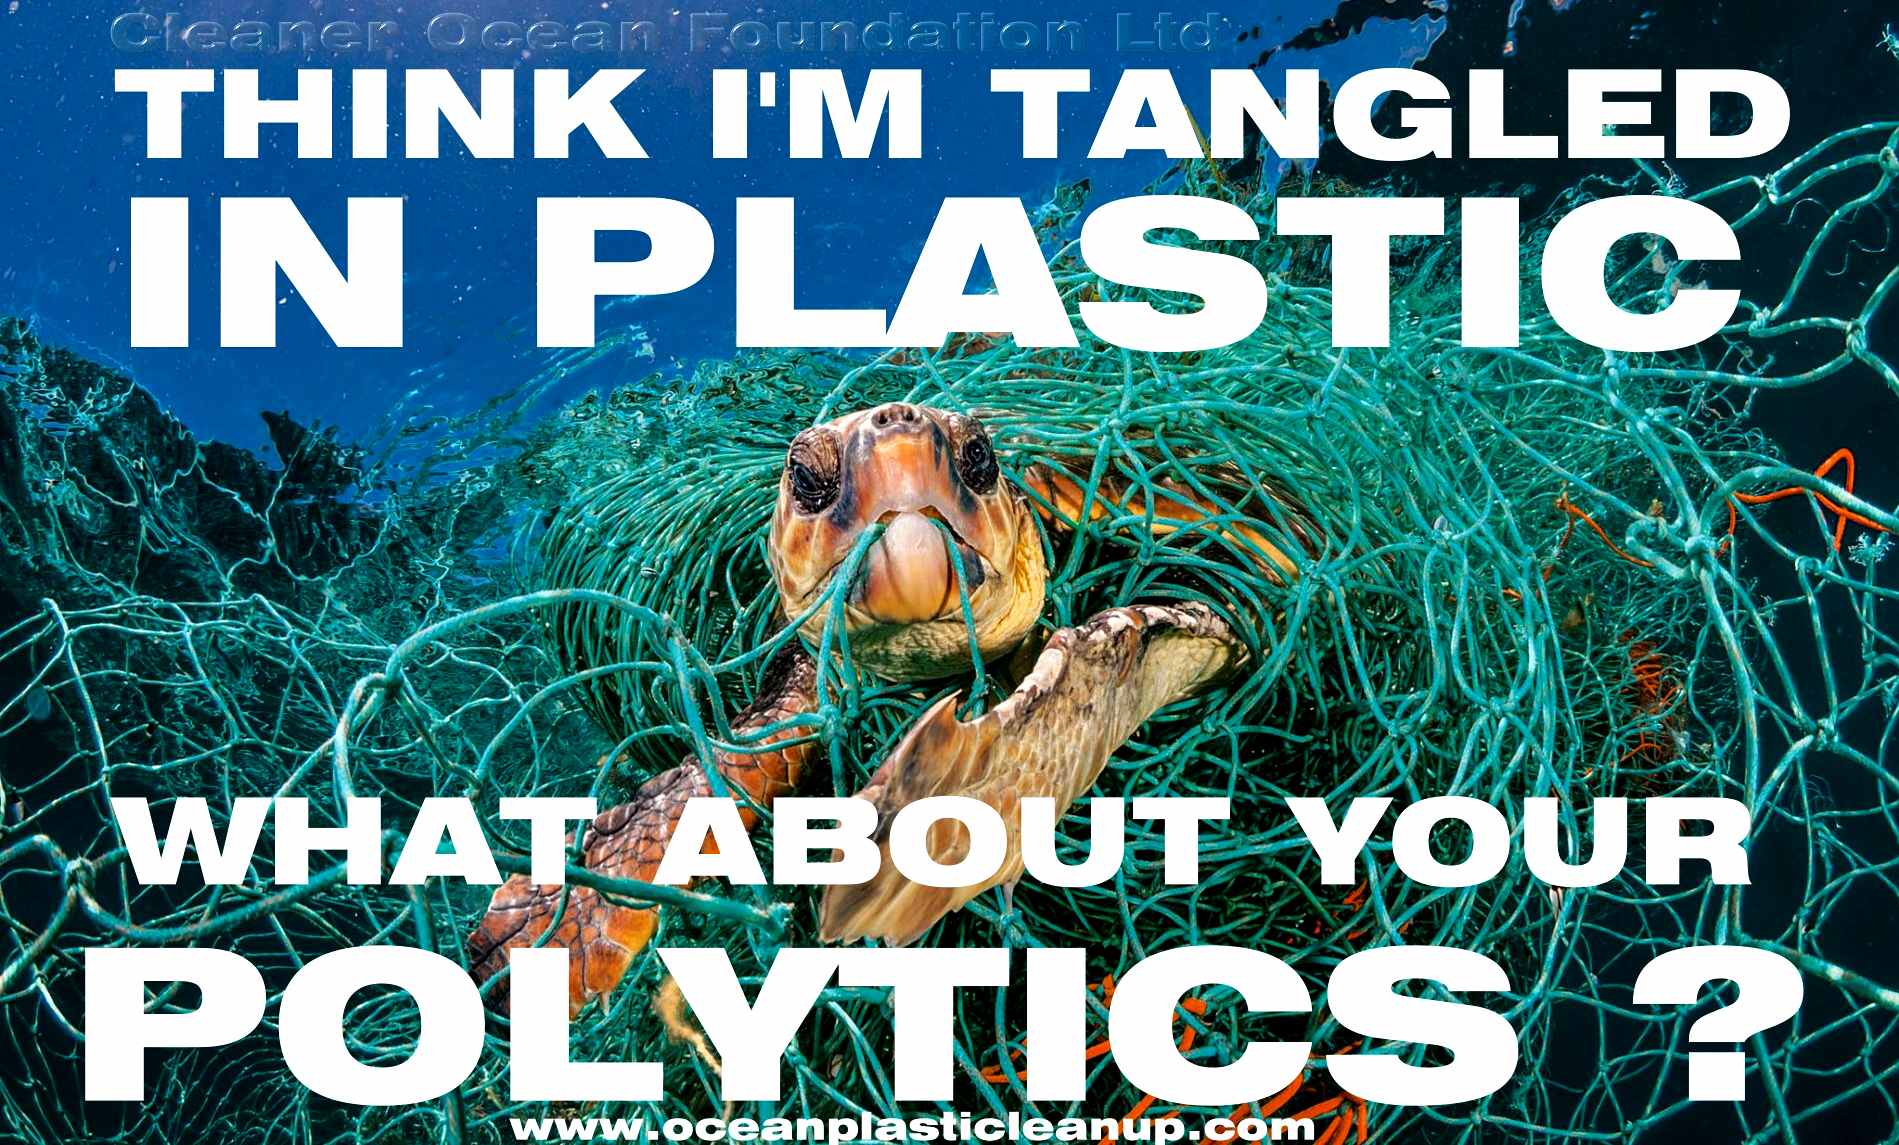 https://www.oceansplasticleanup.com/pictures_oceans_plastics/plastic-politicians-sea-turtle-fishing-nets-tangled-polytics.JPG